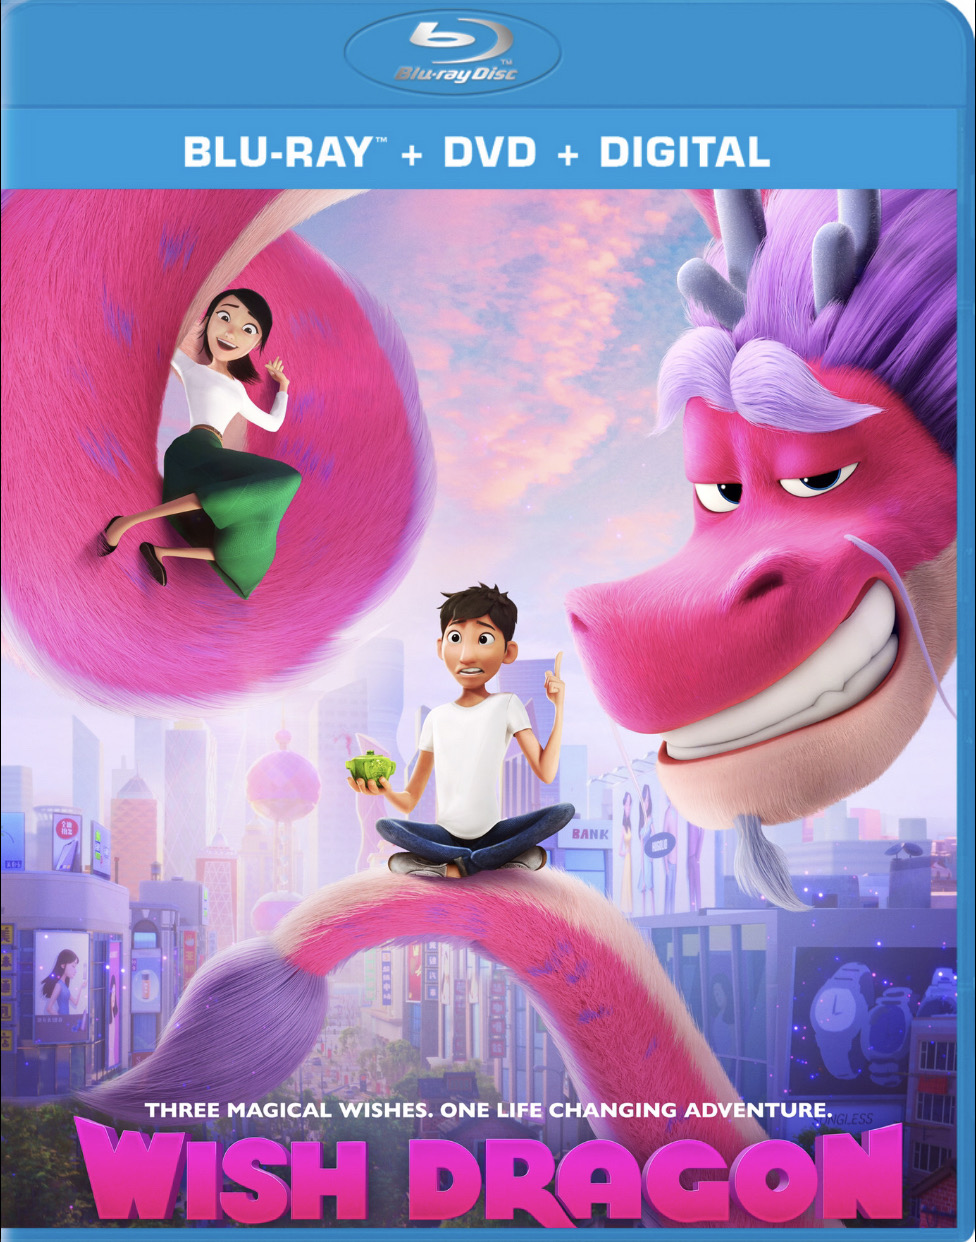 Double Dragon AU - mock Blu-ray cover by RyuKangLivesAgain on DeviantArt